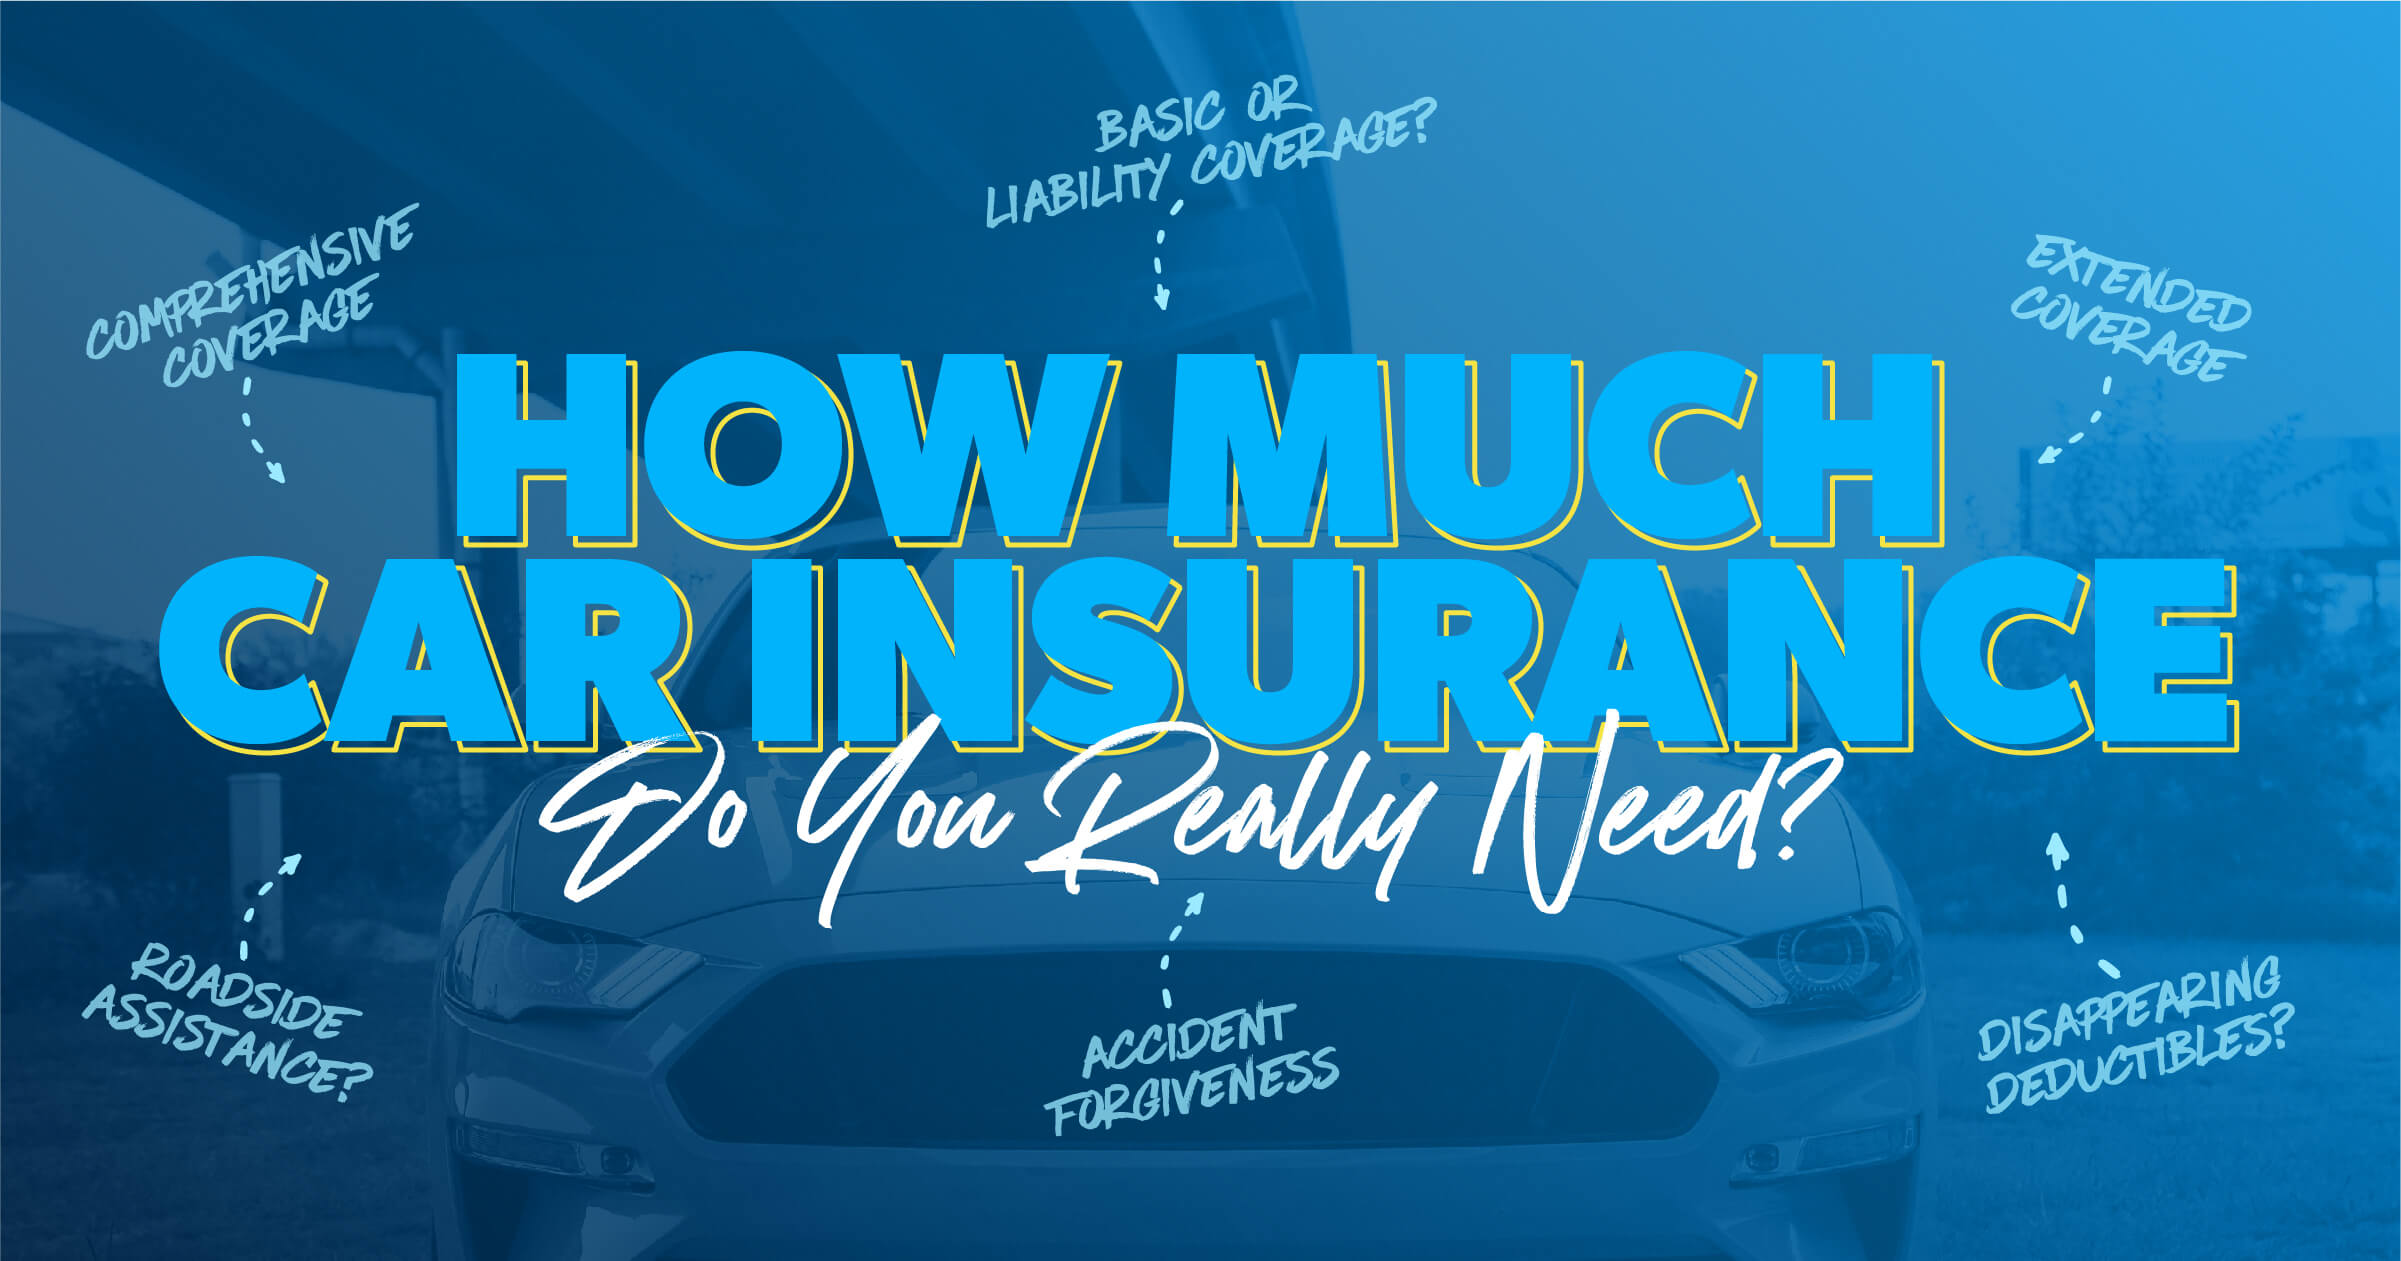 cheap liability car insurance coverage